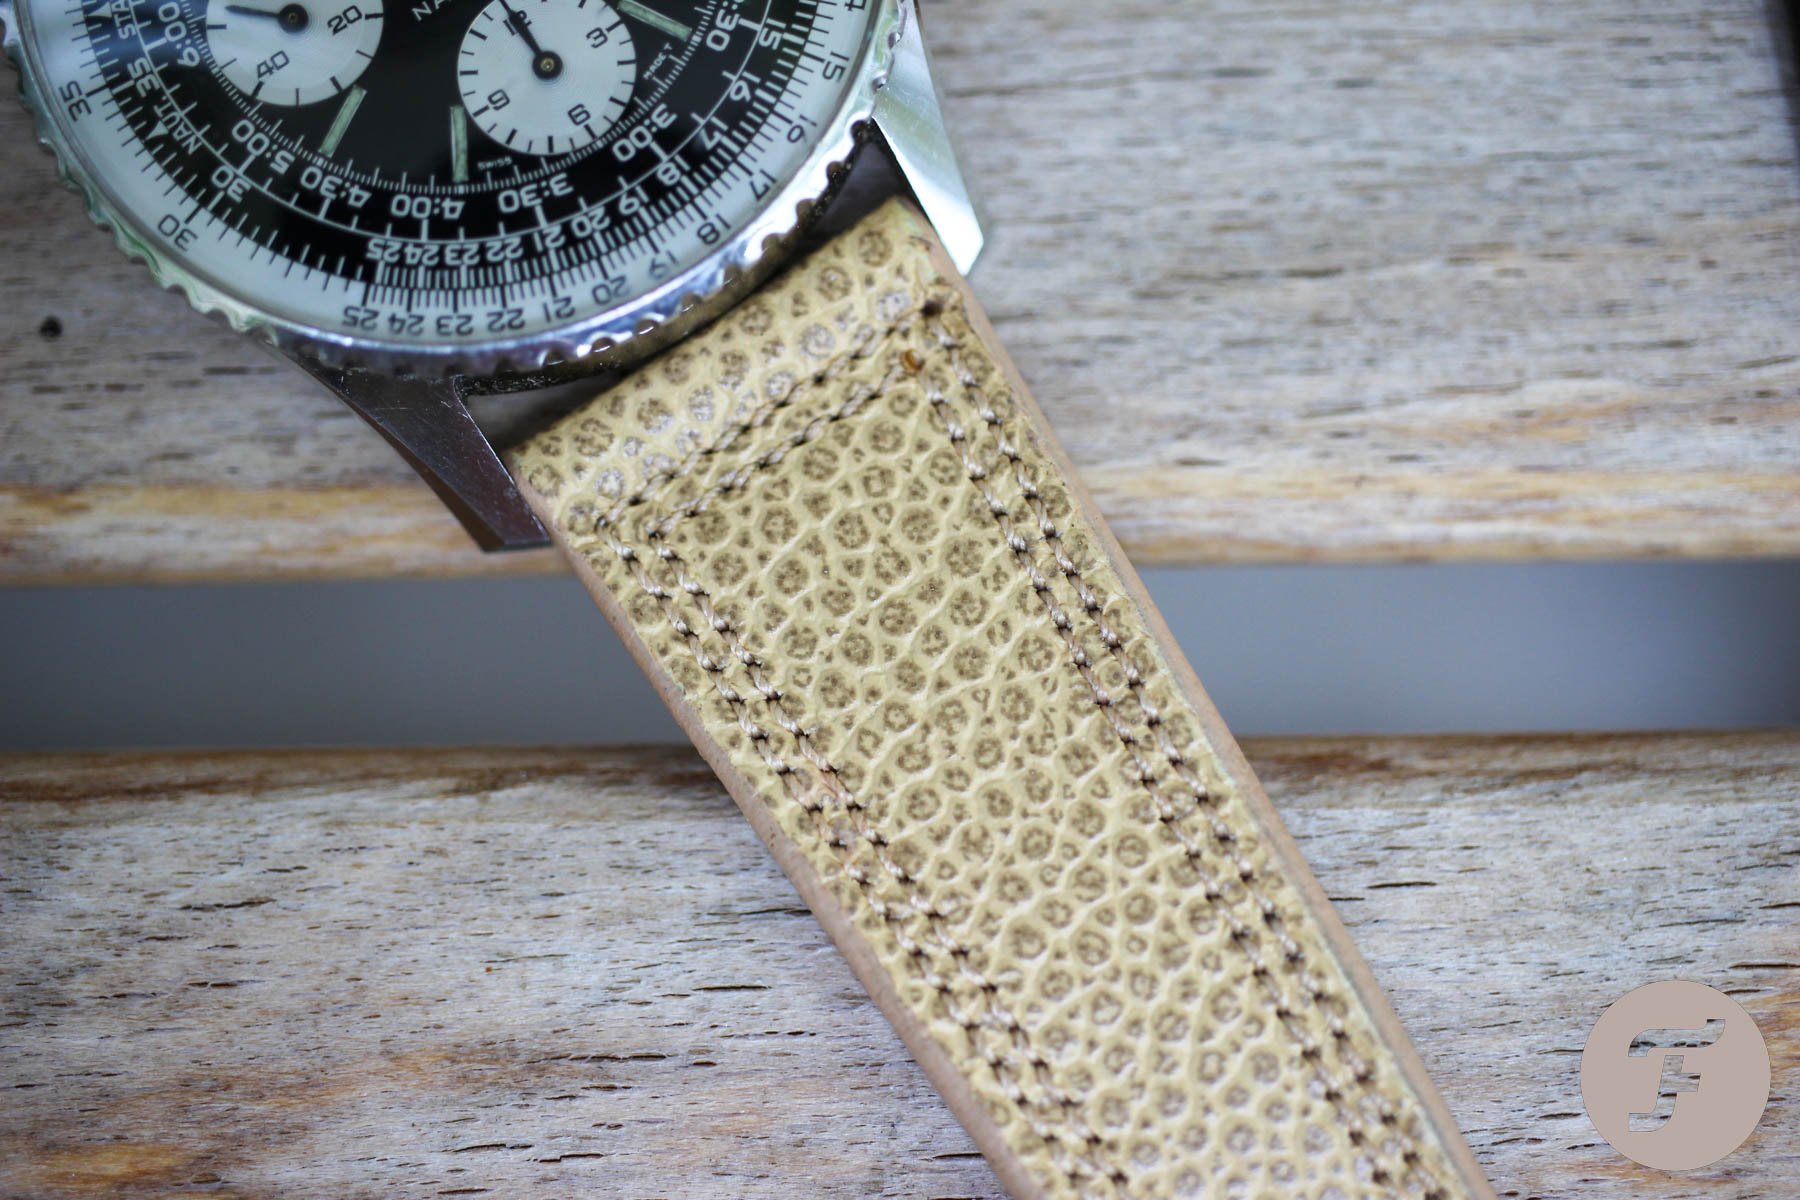 Classic watch straps - Louis Vuitton Visconti Milano watch straps